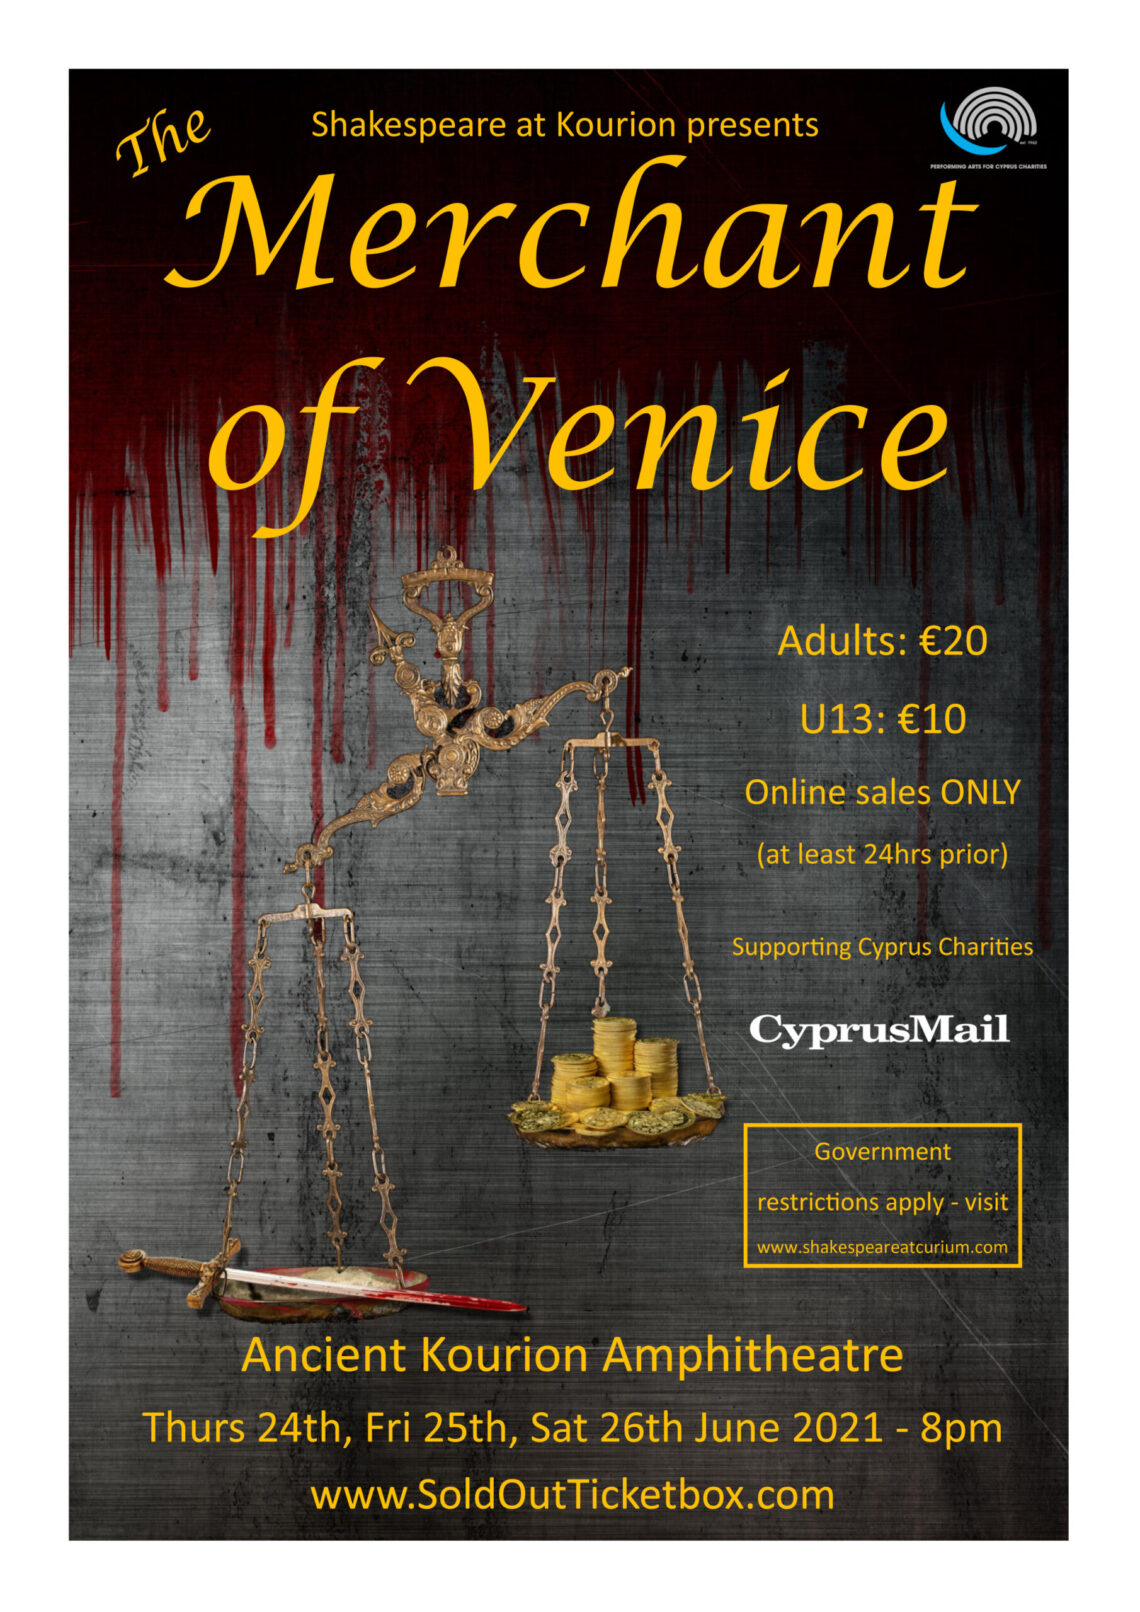 Shakespeare at Curium Merchant of Venice